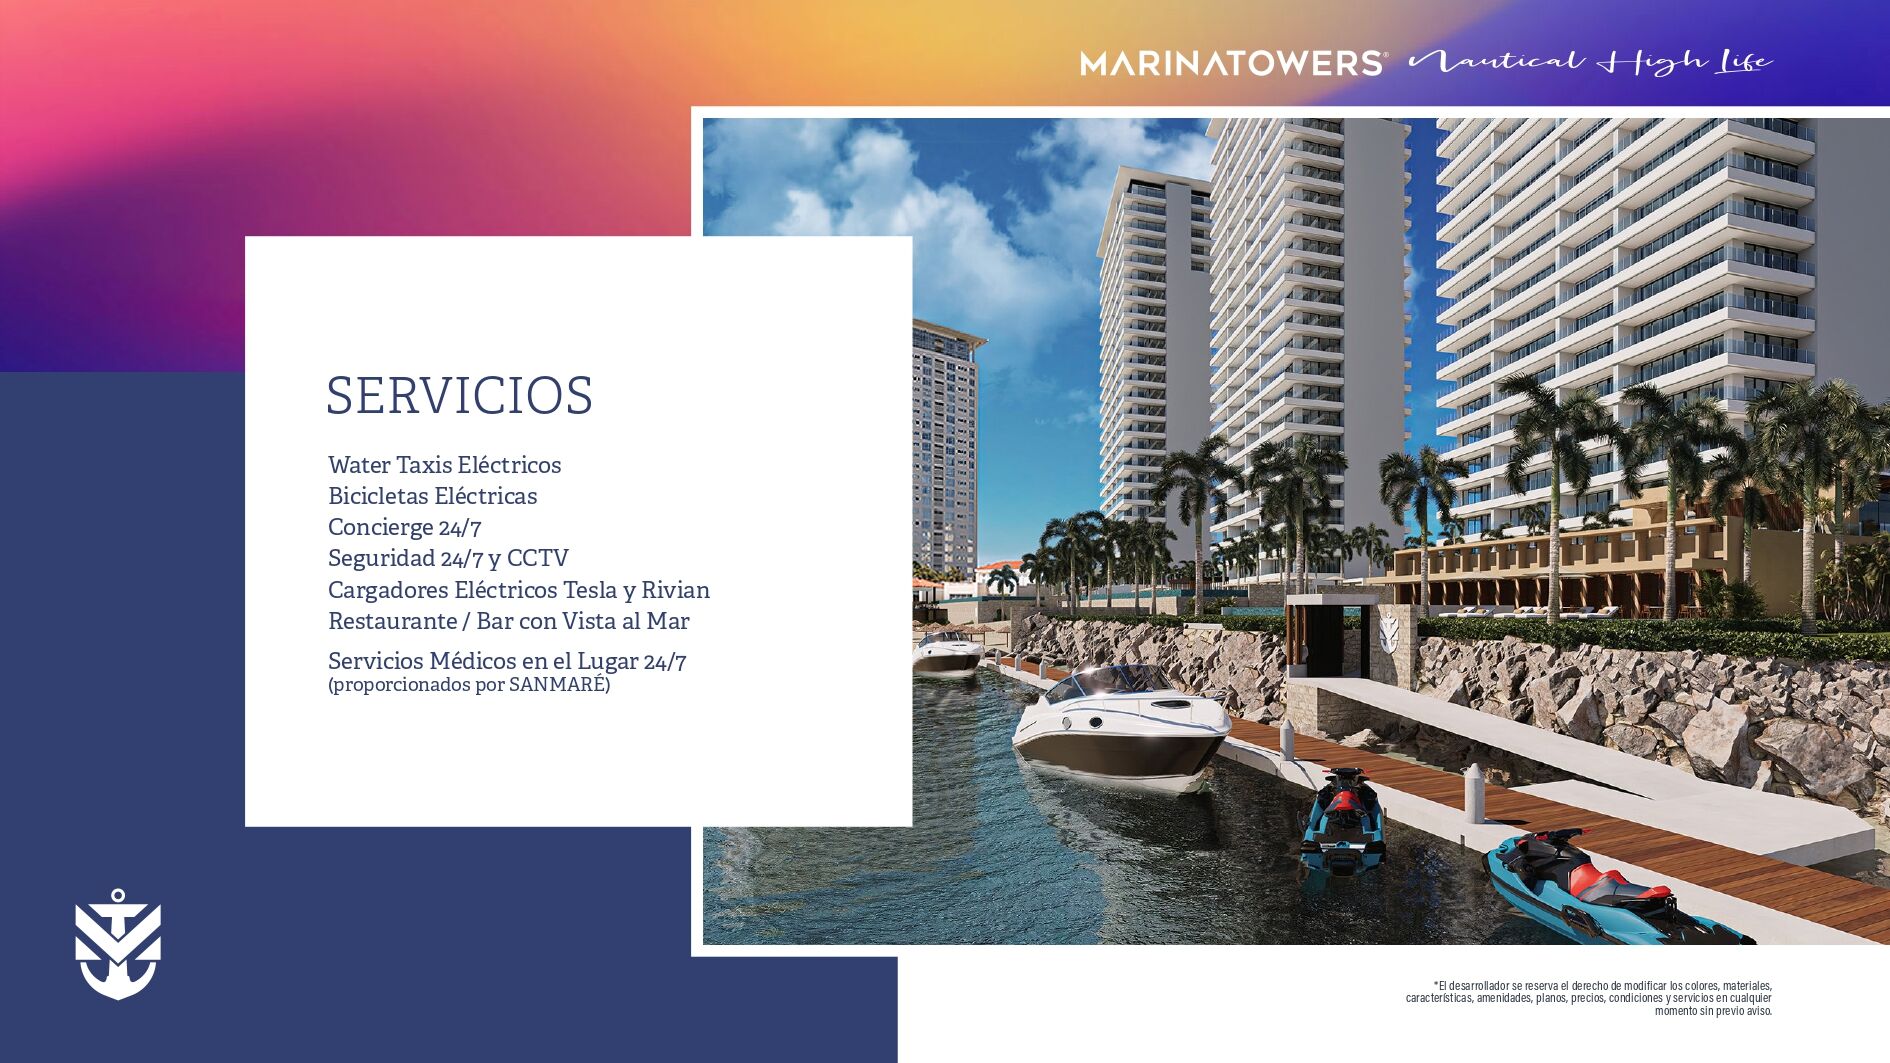 MarinaTowers Junio23 es_page 0004, Marina Towers, Puerto Vallarta, Jalisco, México